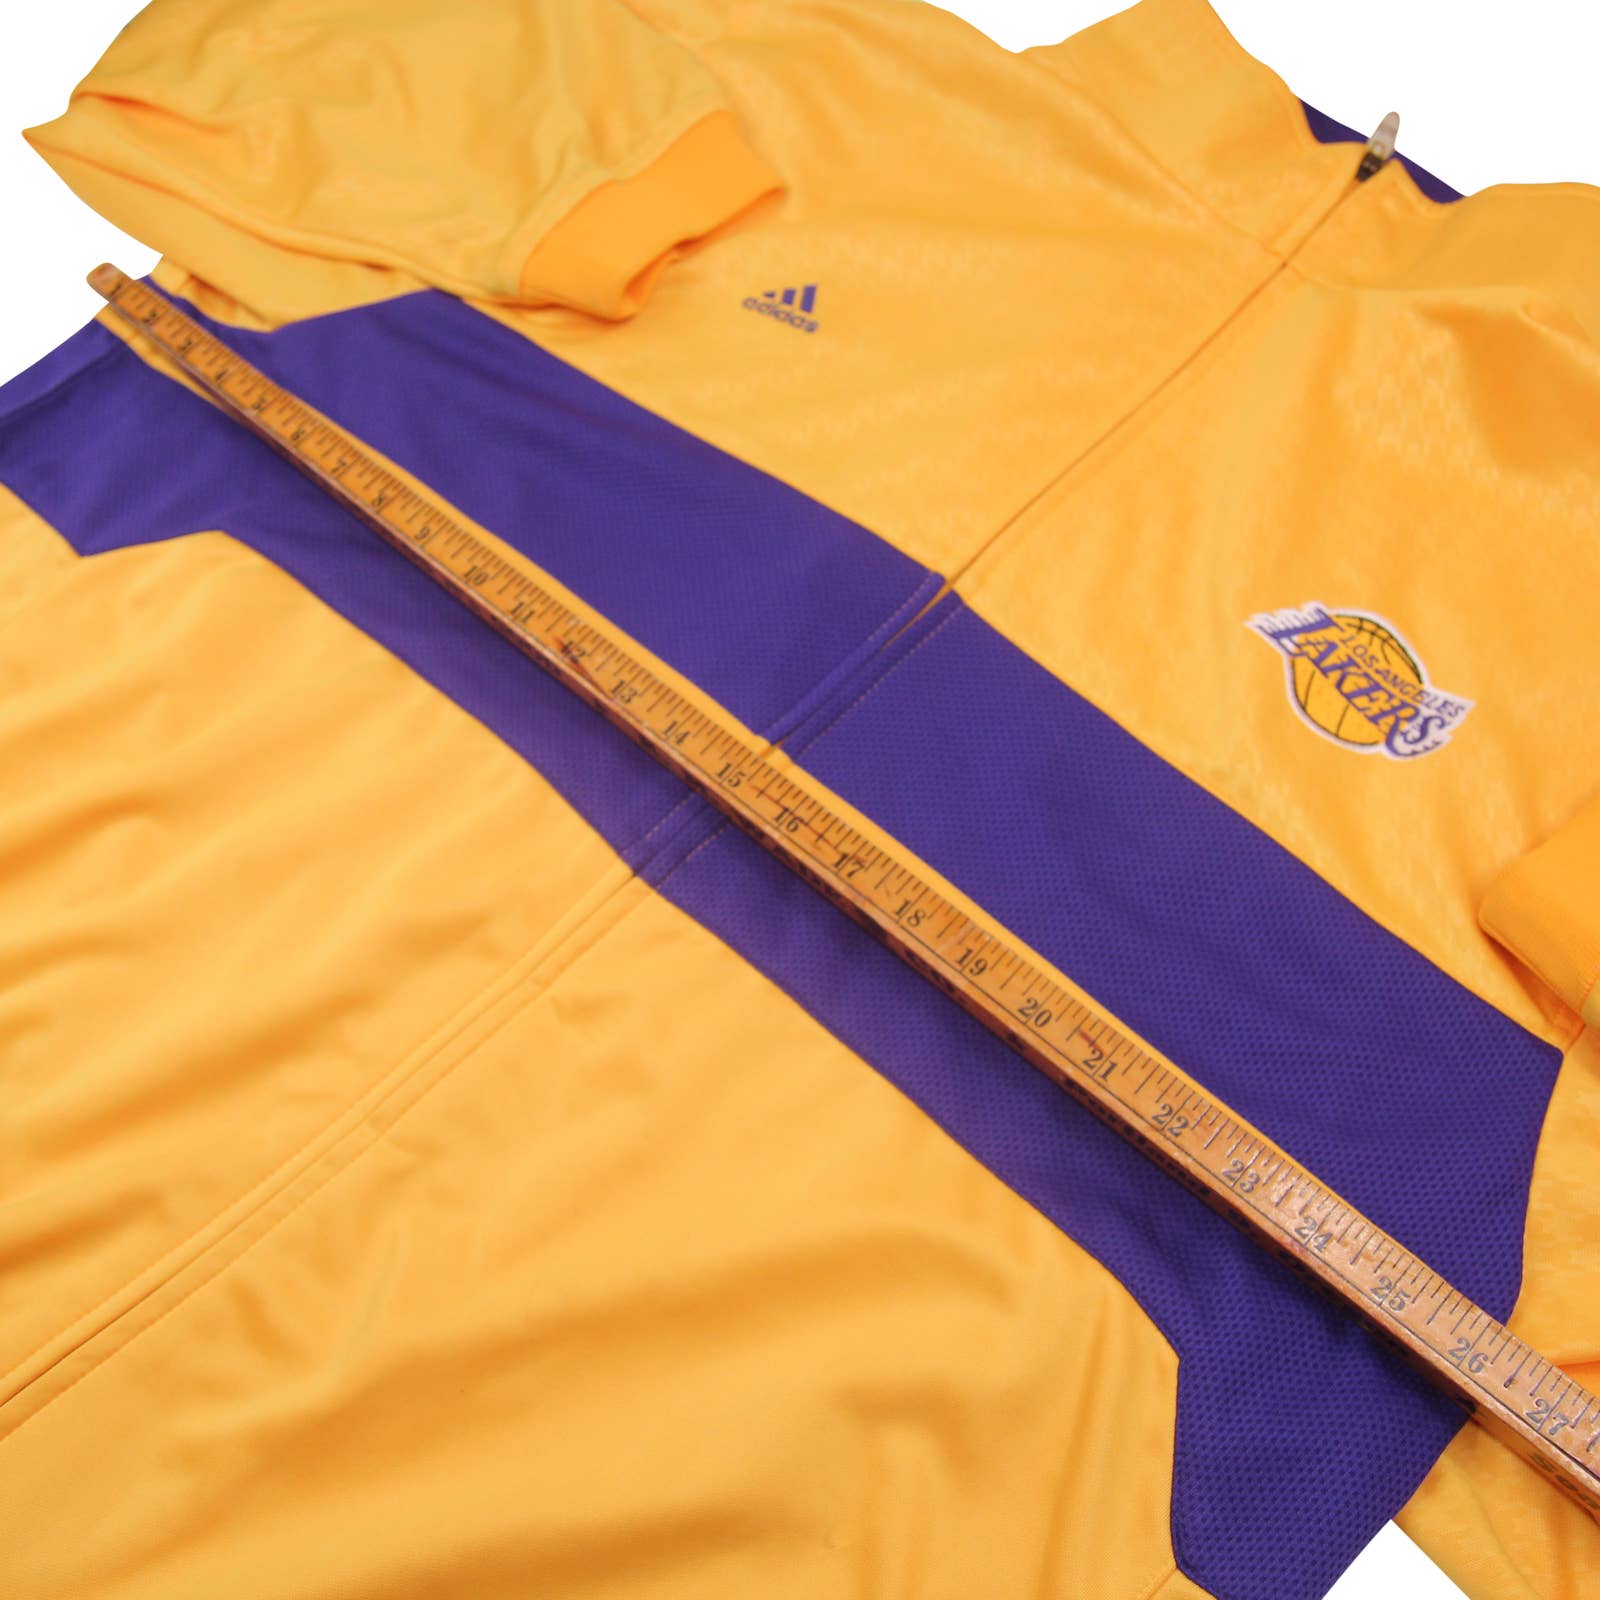 adidas, Jackets & Coats, Adidas Lakers Track Jacket